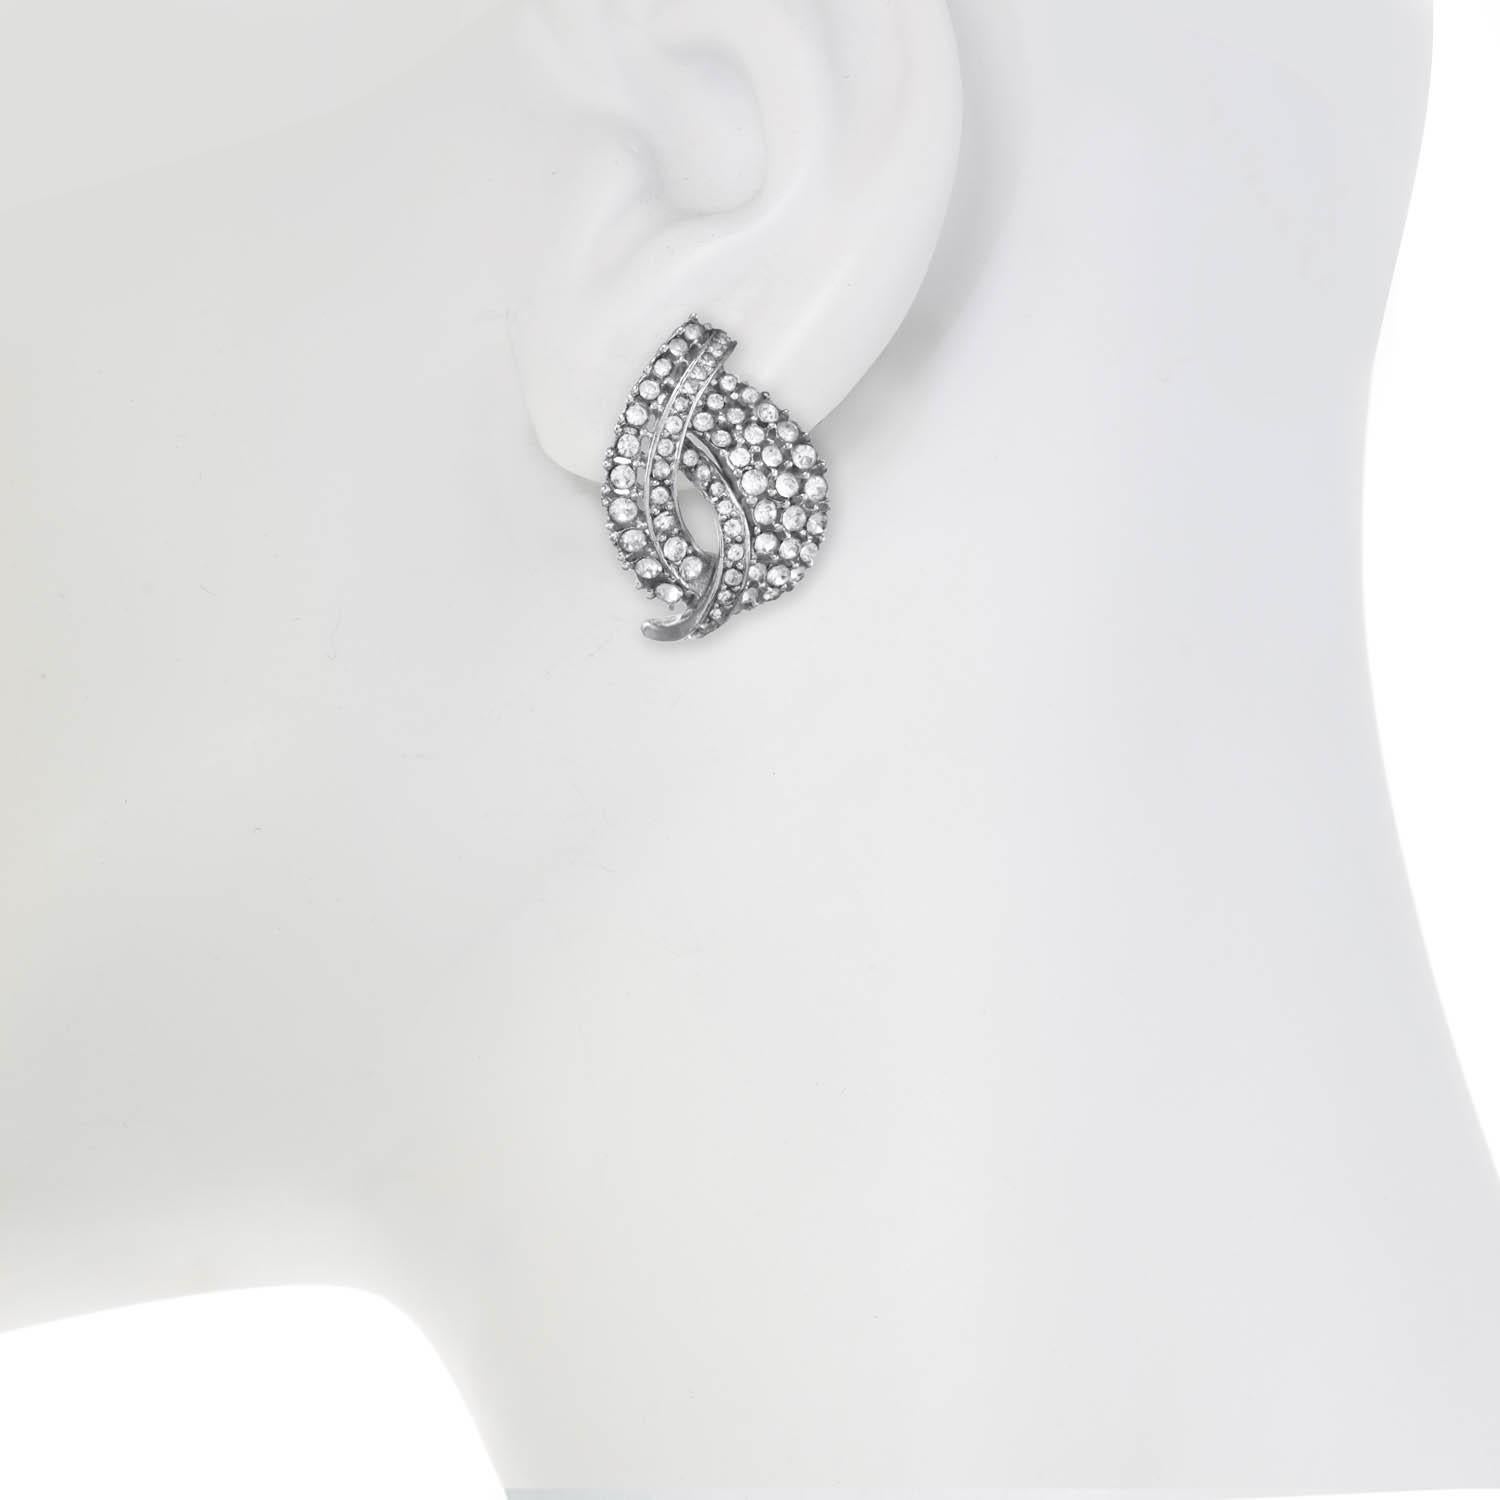 rhinestone clip earrings